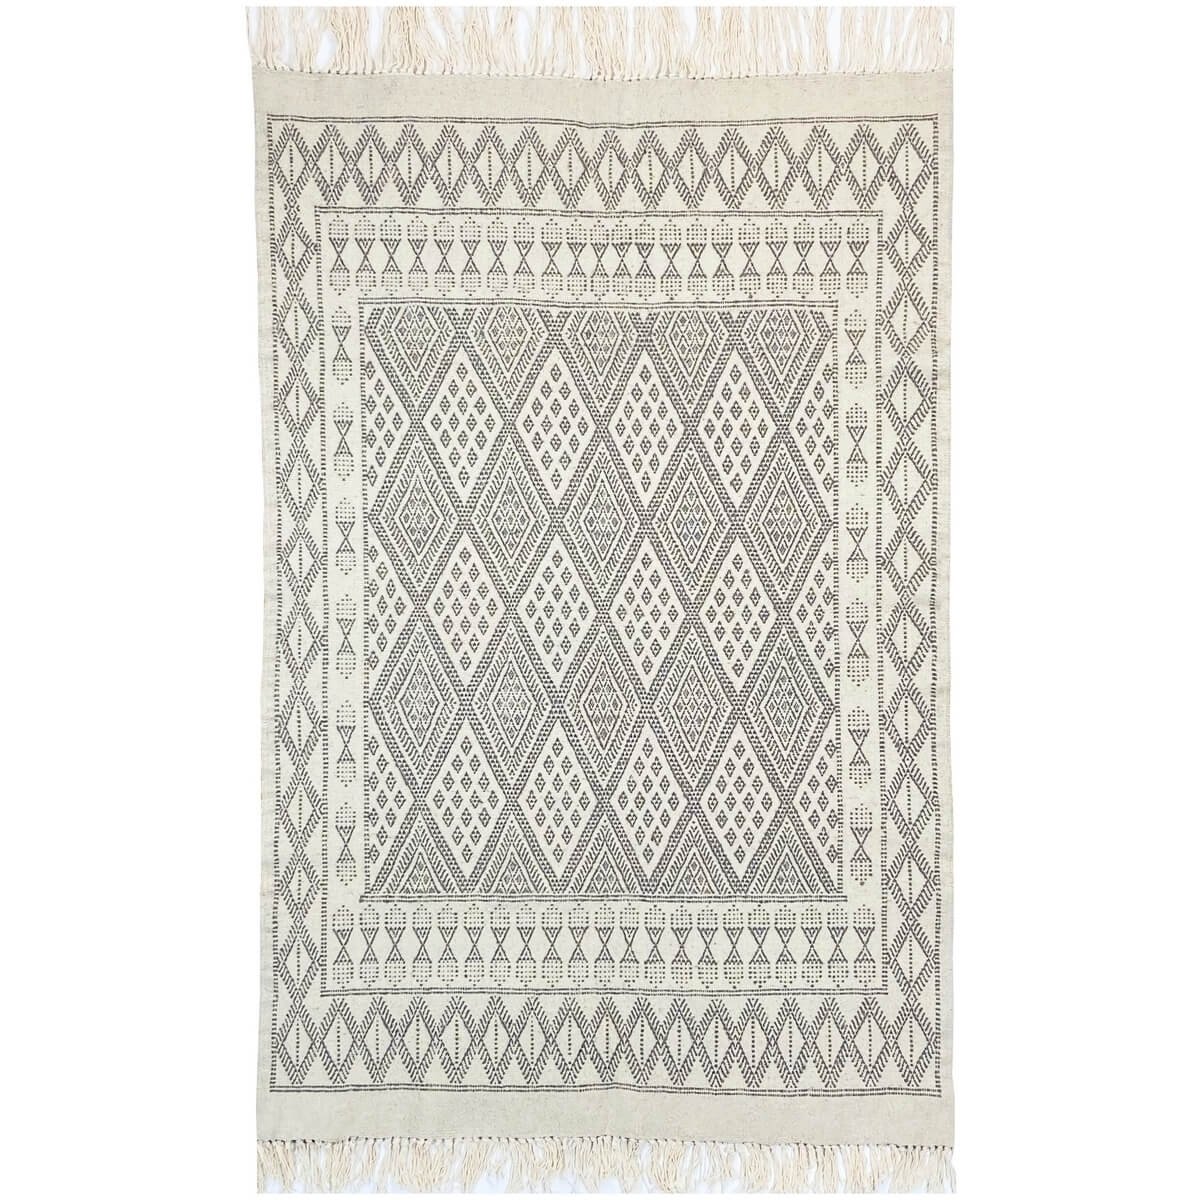 Berber carpet Rug Margoum Zembra 120x190 White/Grey (Handmade, Wool, Tunisia) Tunisian margoum rug from the city of Kairouan. Re